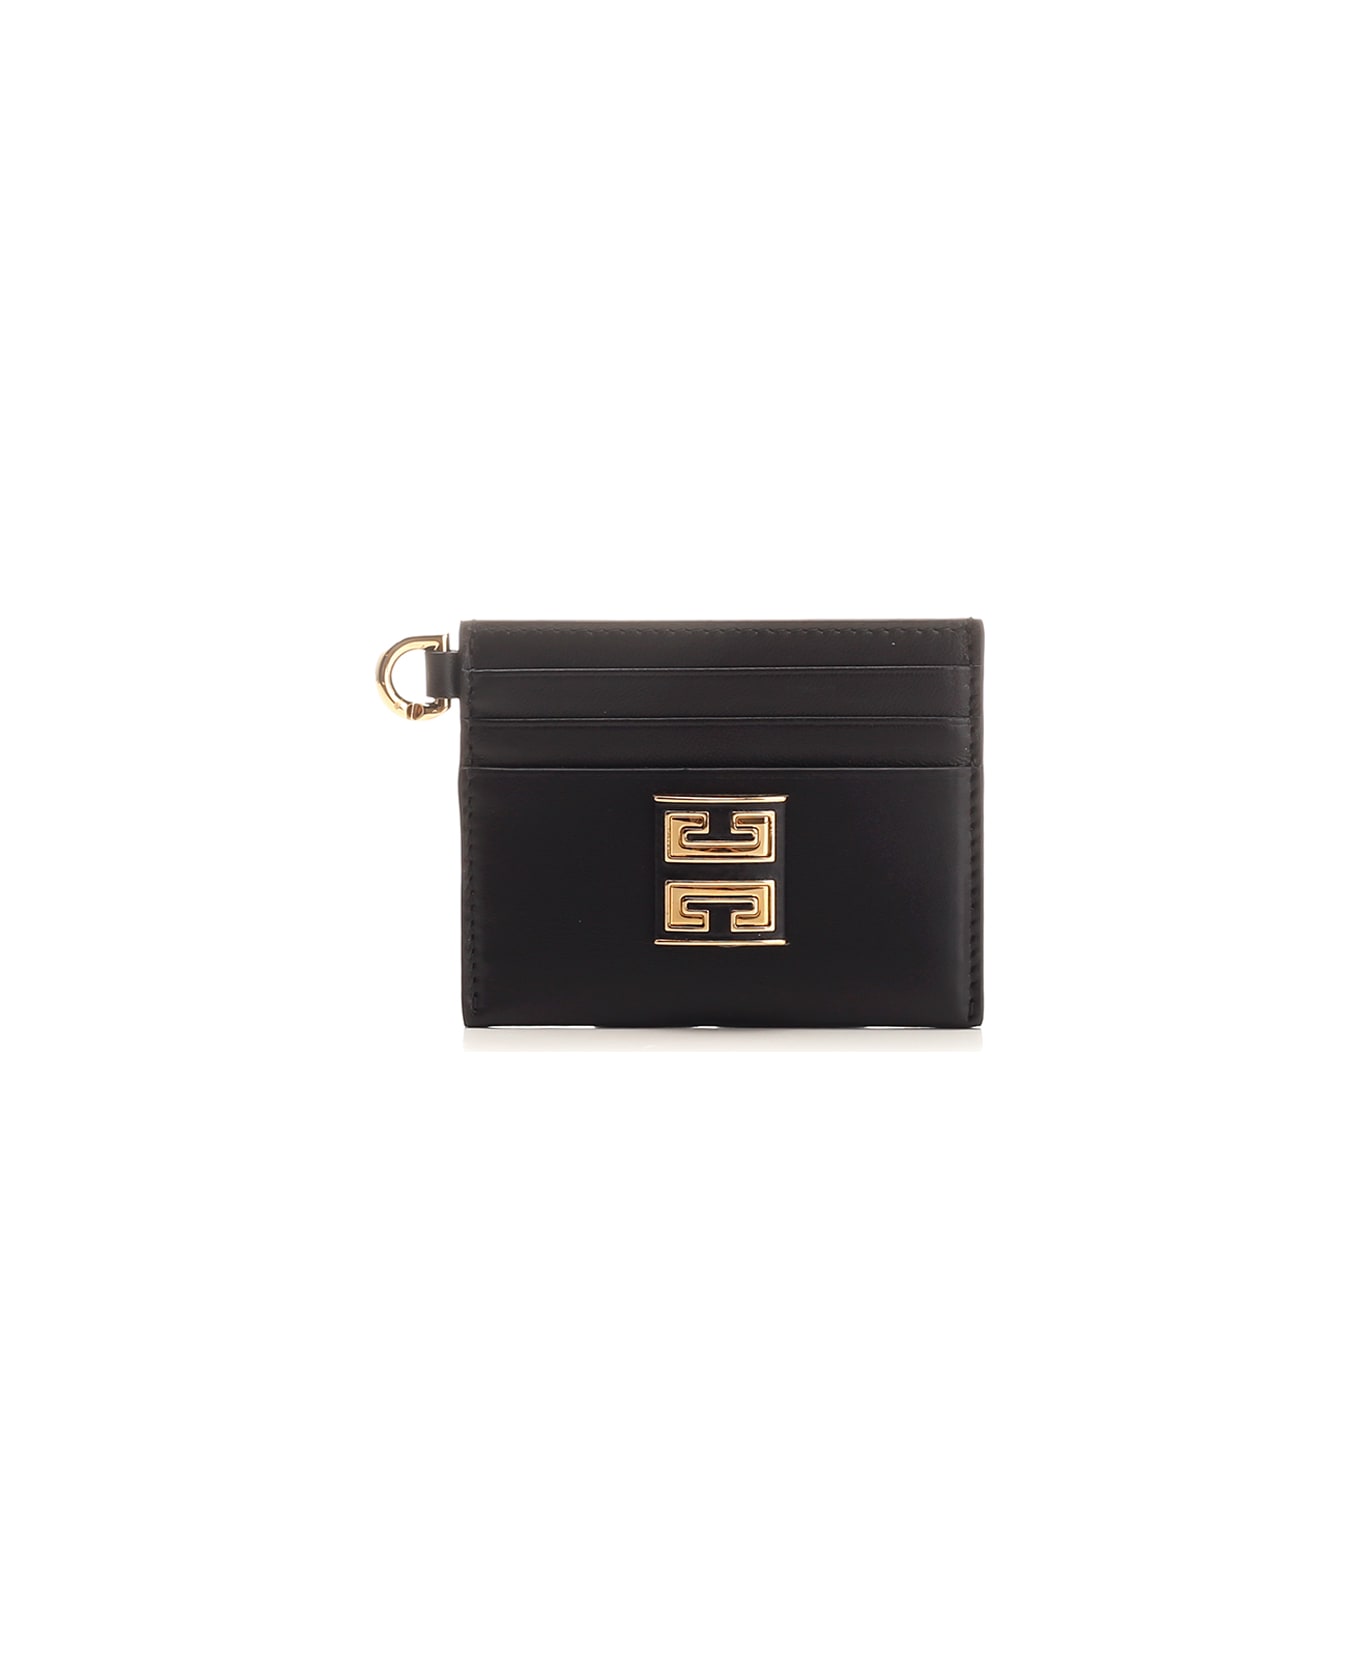 Givenchy 4g Card Case - Black 財布